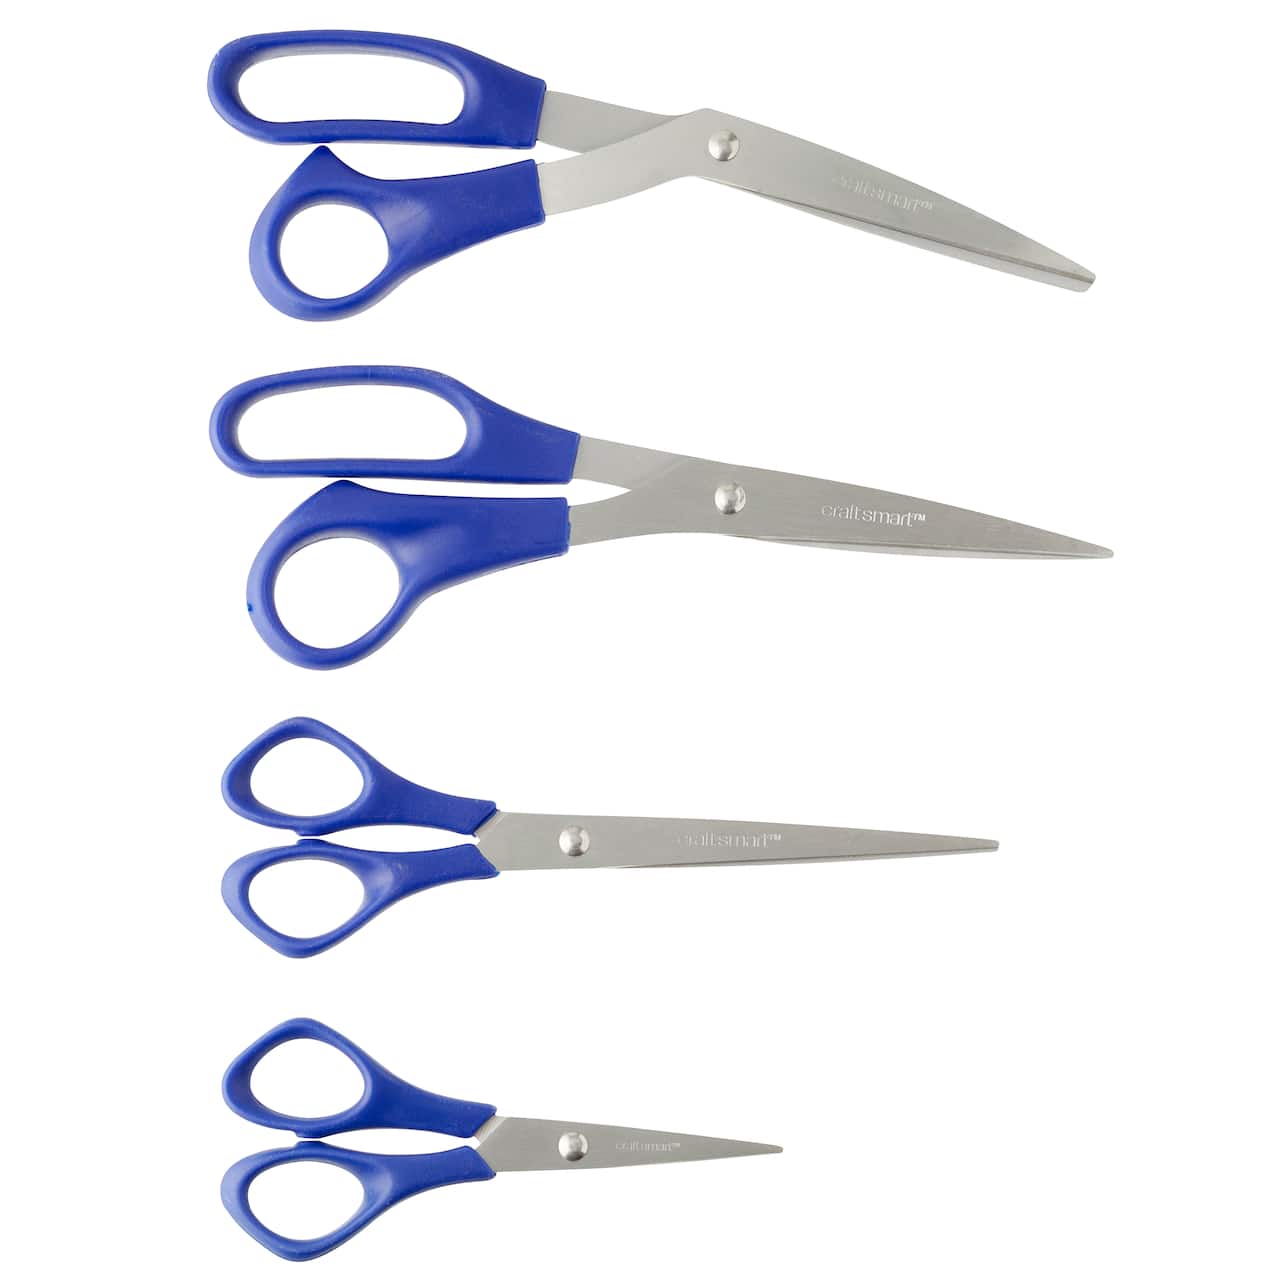 24 Packs: 4 ct. (96 total) Multi-Purpose Scissors Value Pack by